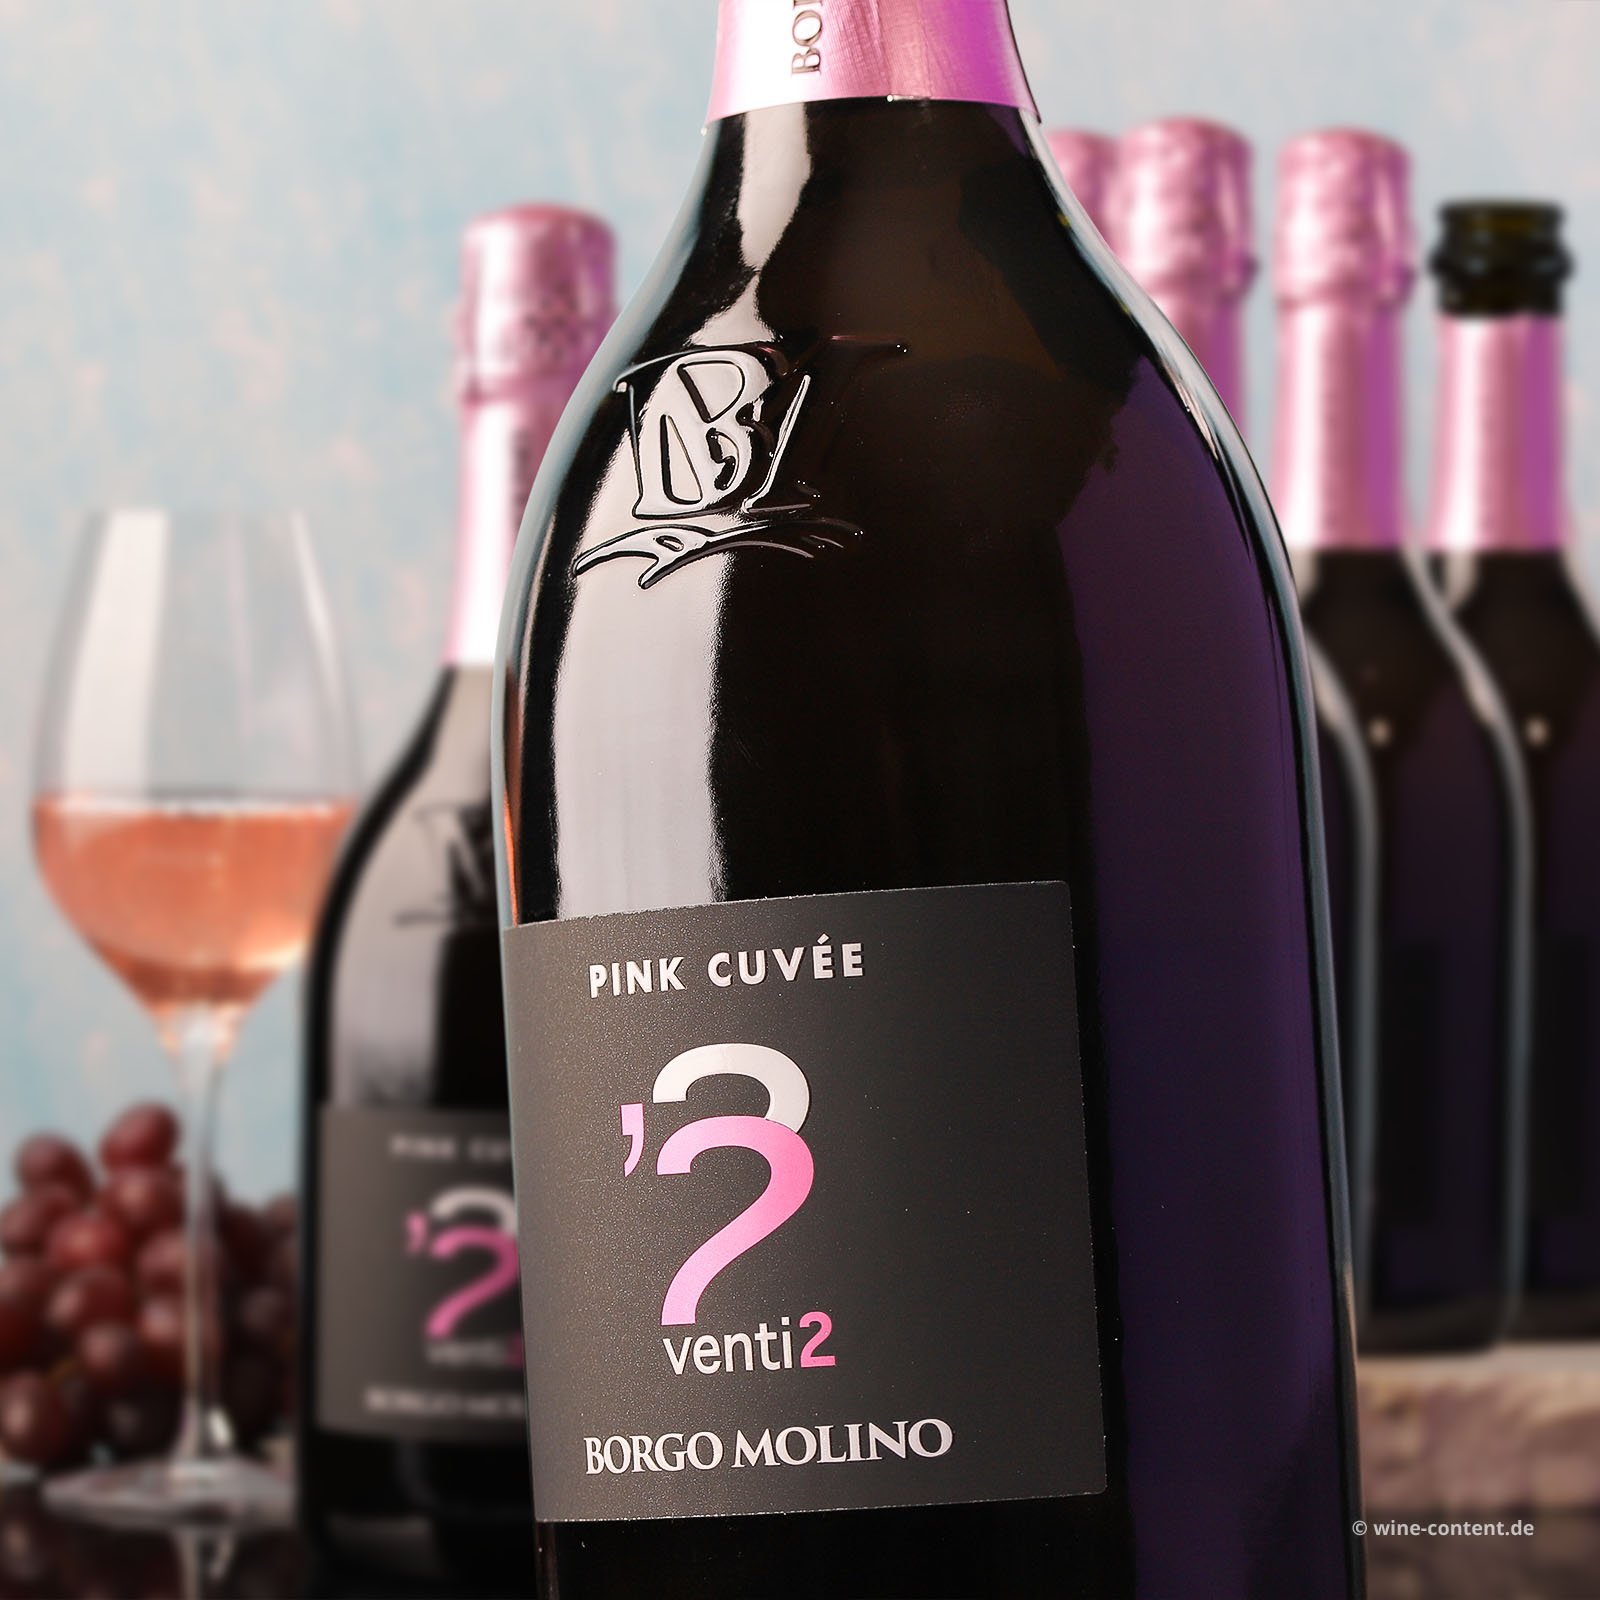 6er-Sparpaket Spumante venti2 Pink Cuvée Extra Dry neue Flaschenform